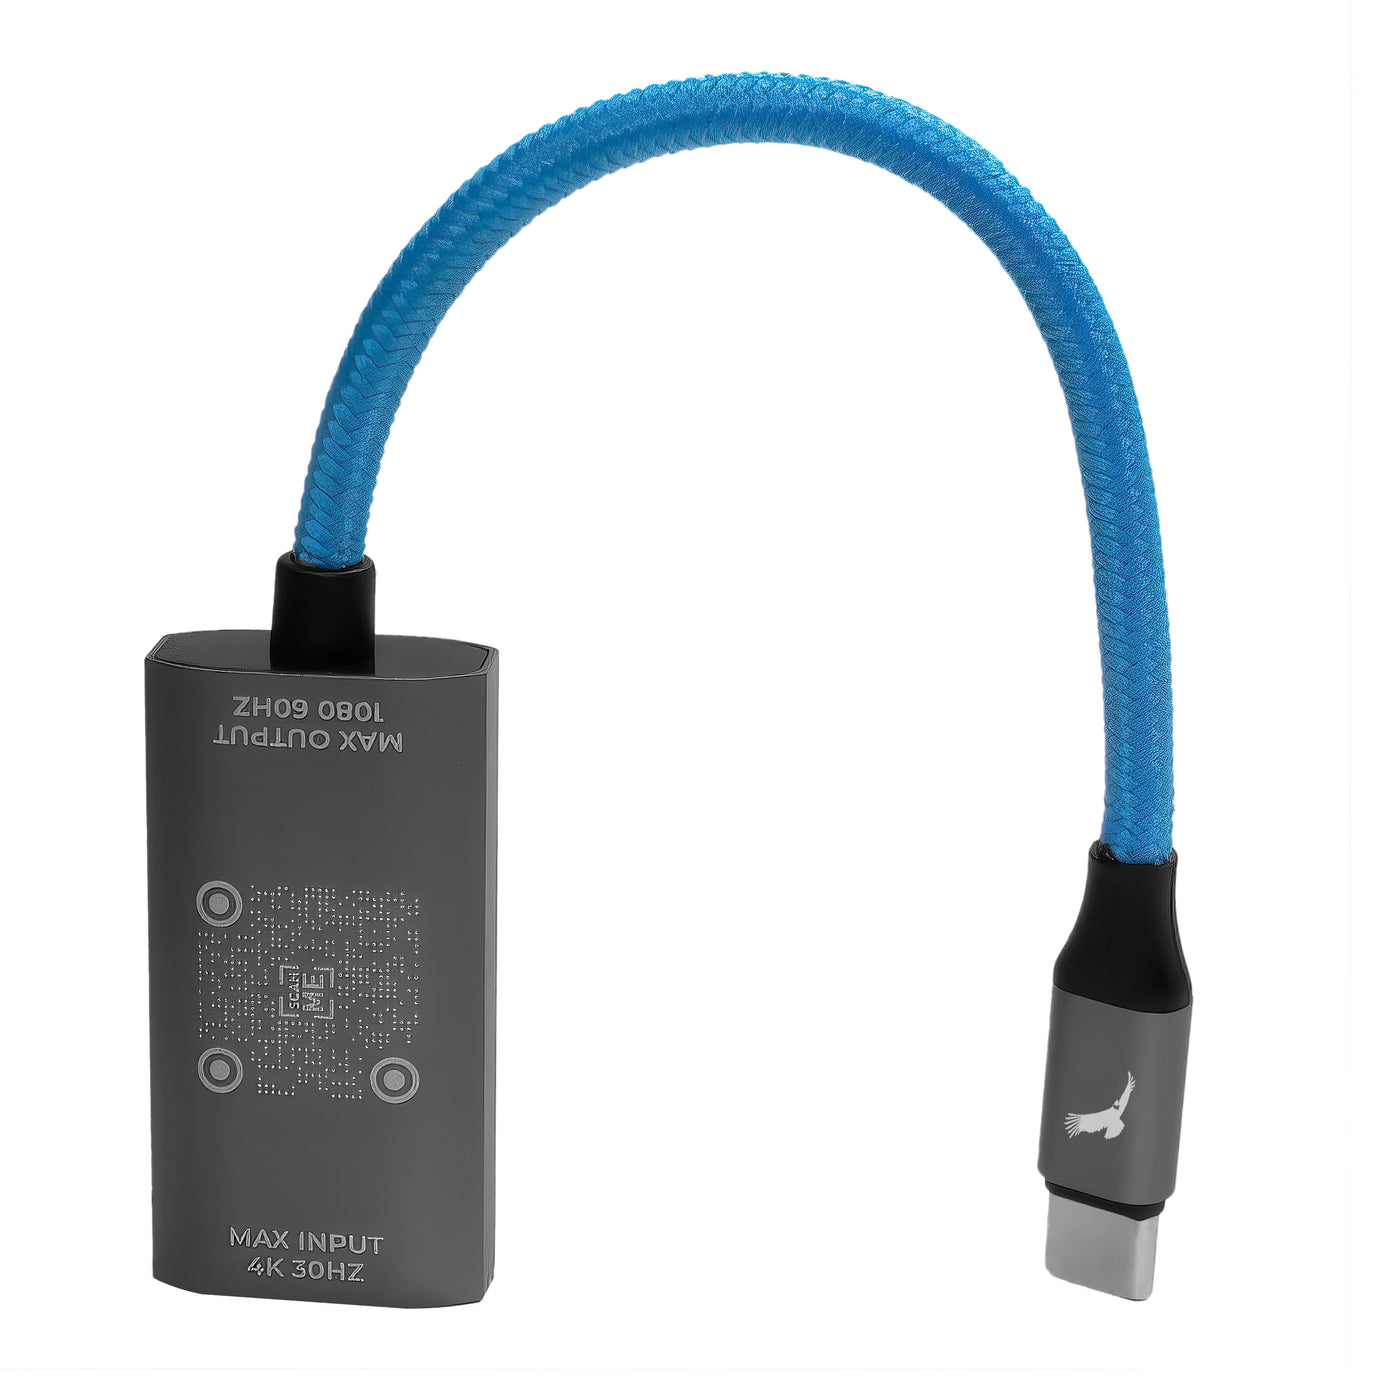 HDMI to USB-C Video Capture Adapter : ID 4910 : $24.95 : Adafruit